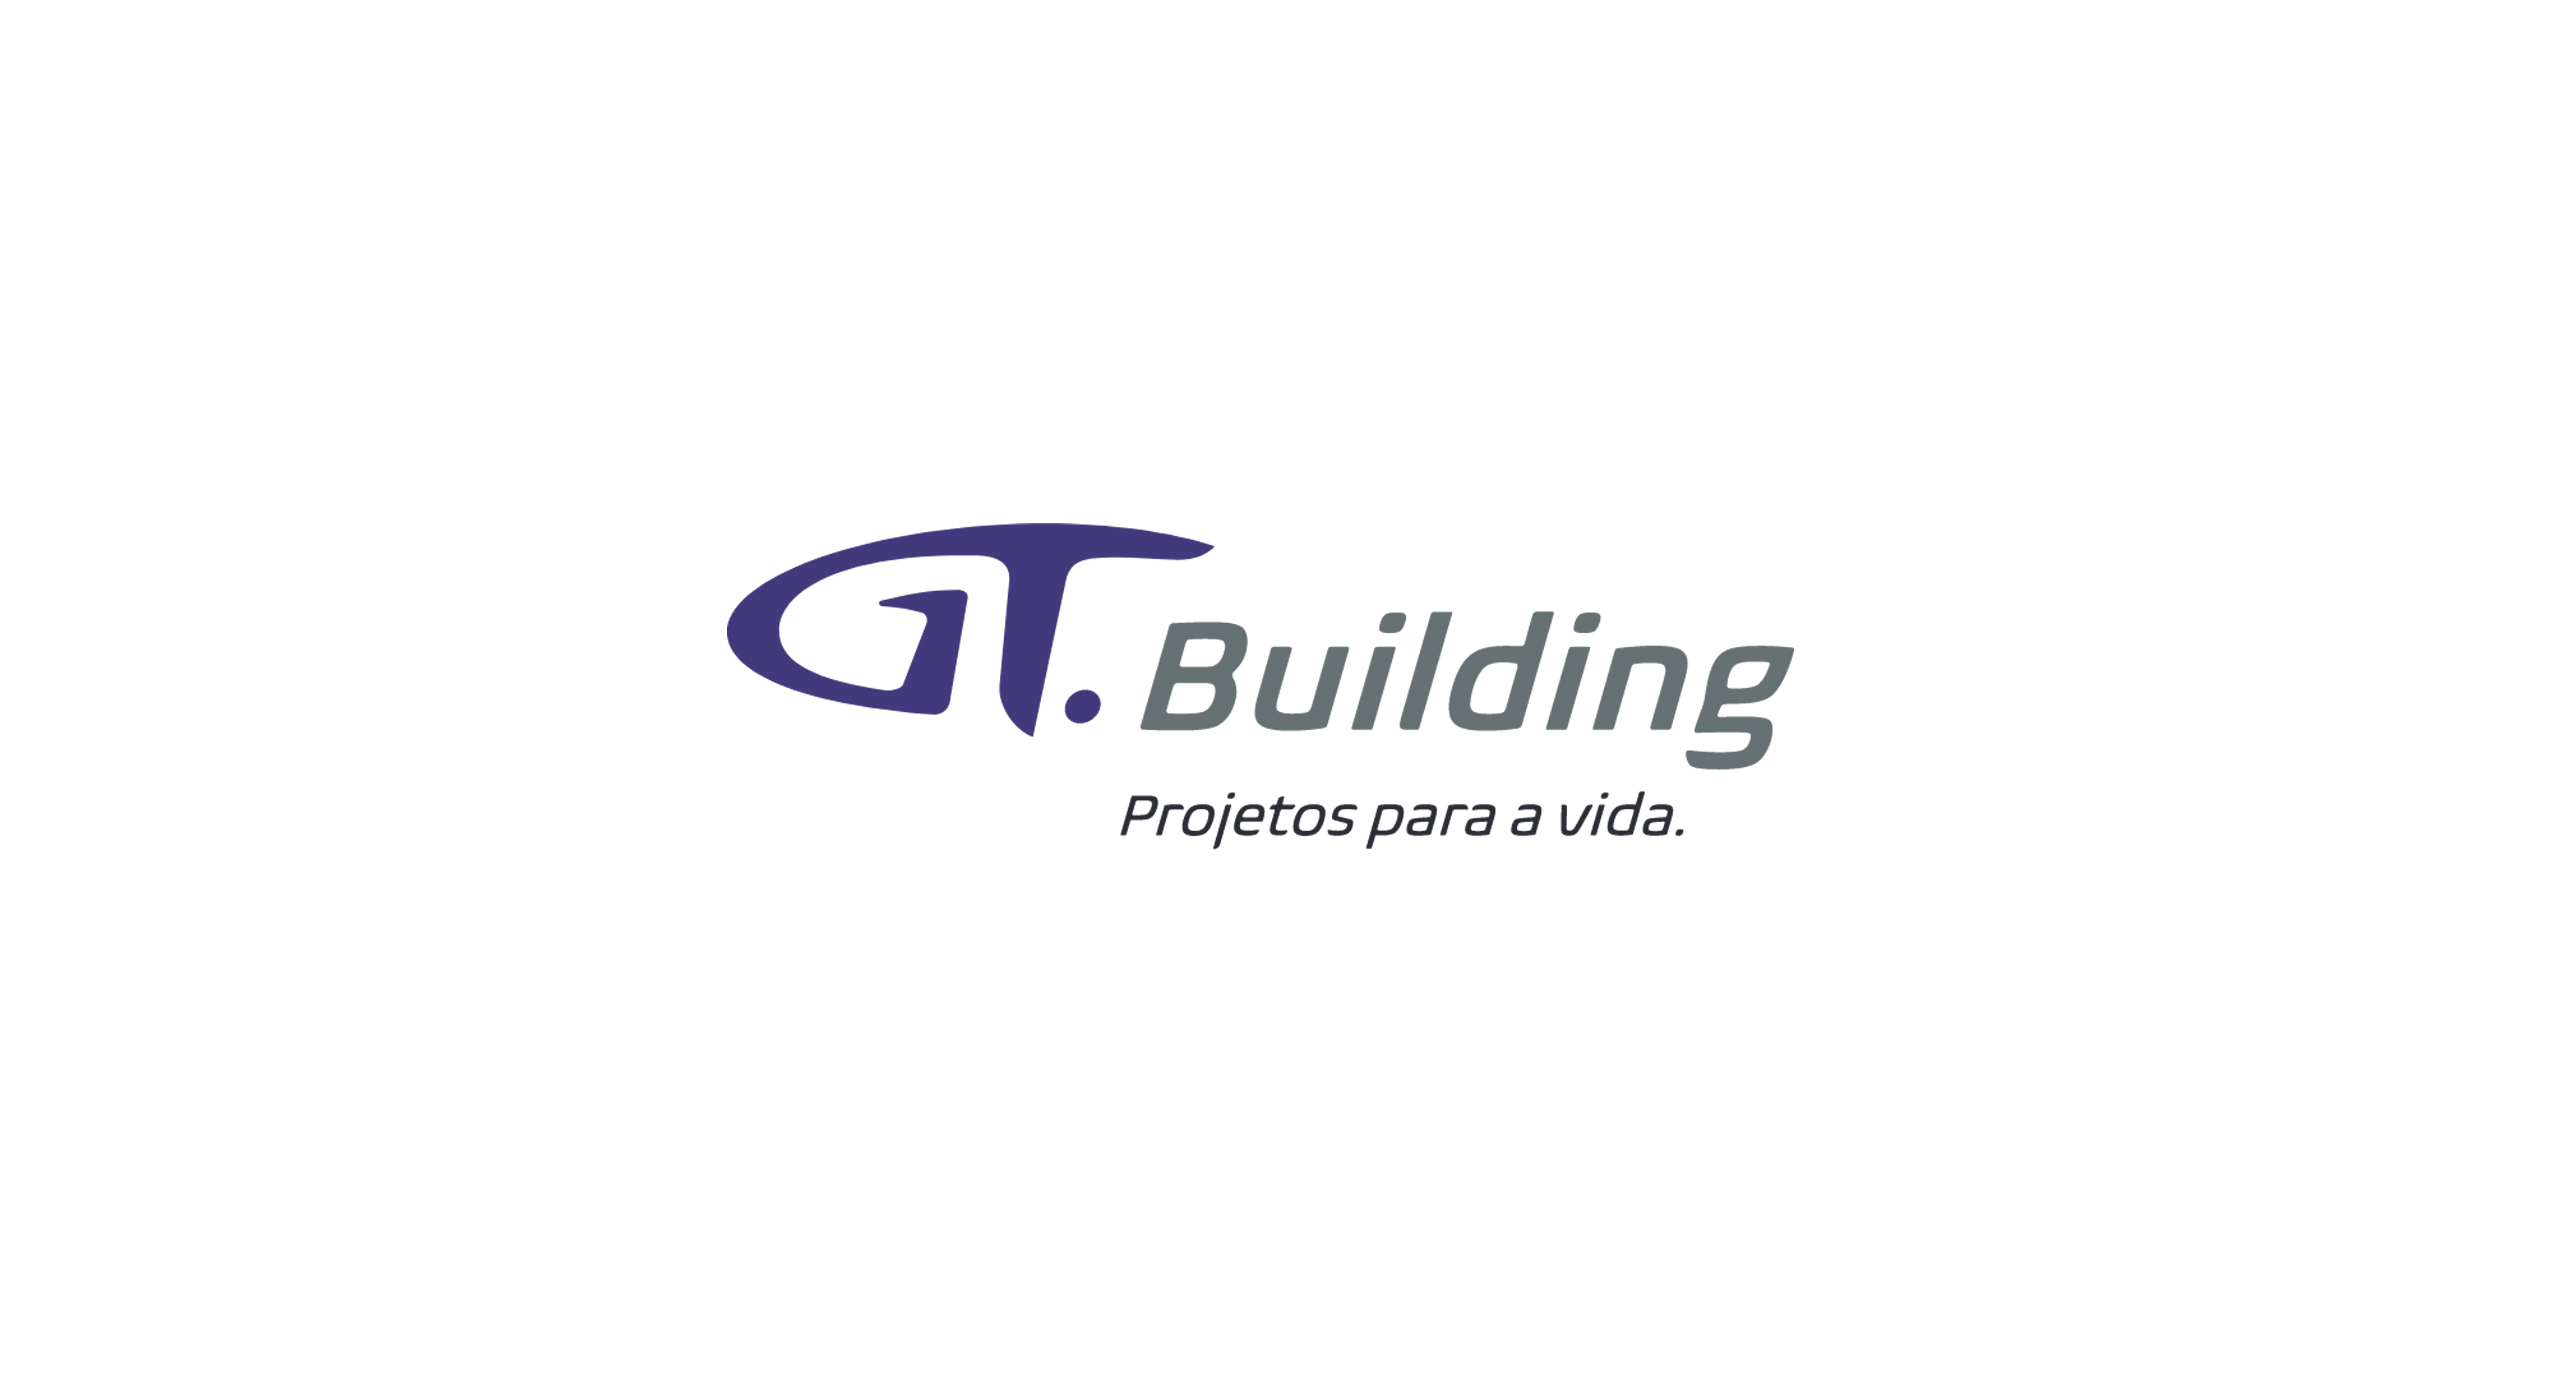 Projeto arquitetônico | GT Building | Curitiba - PR